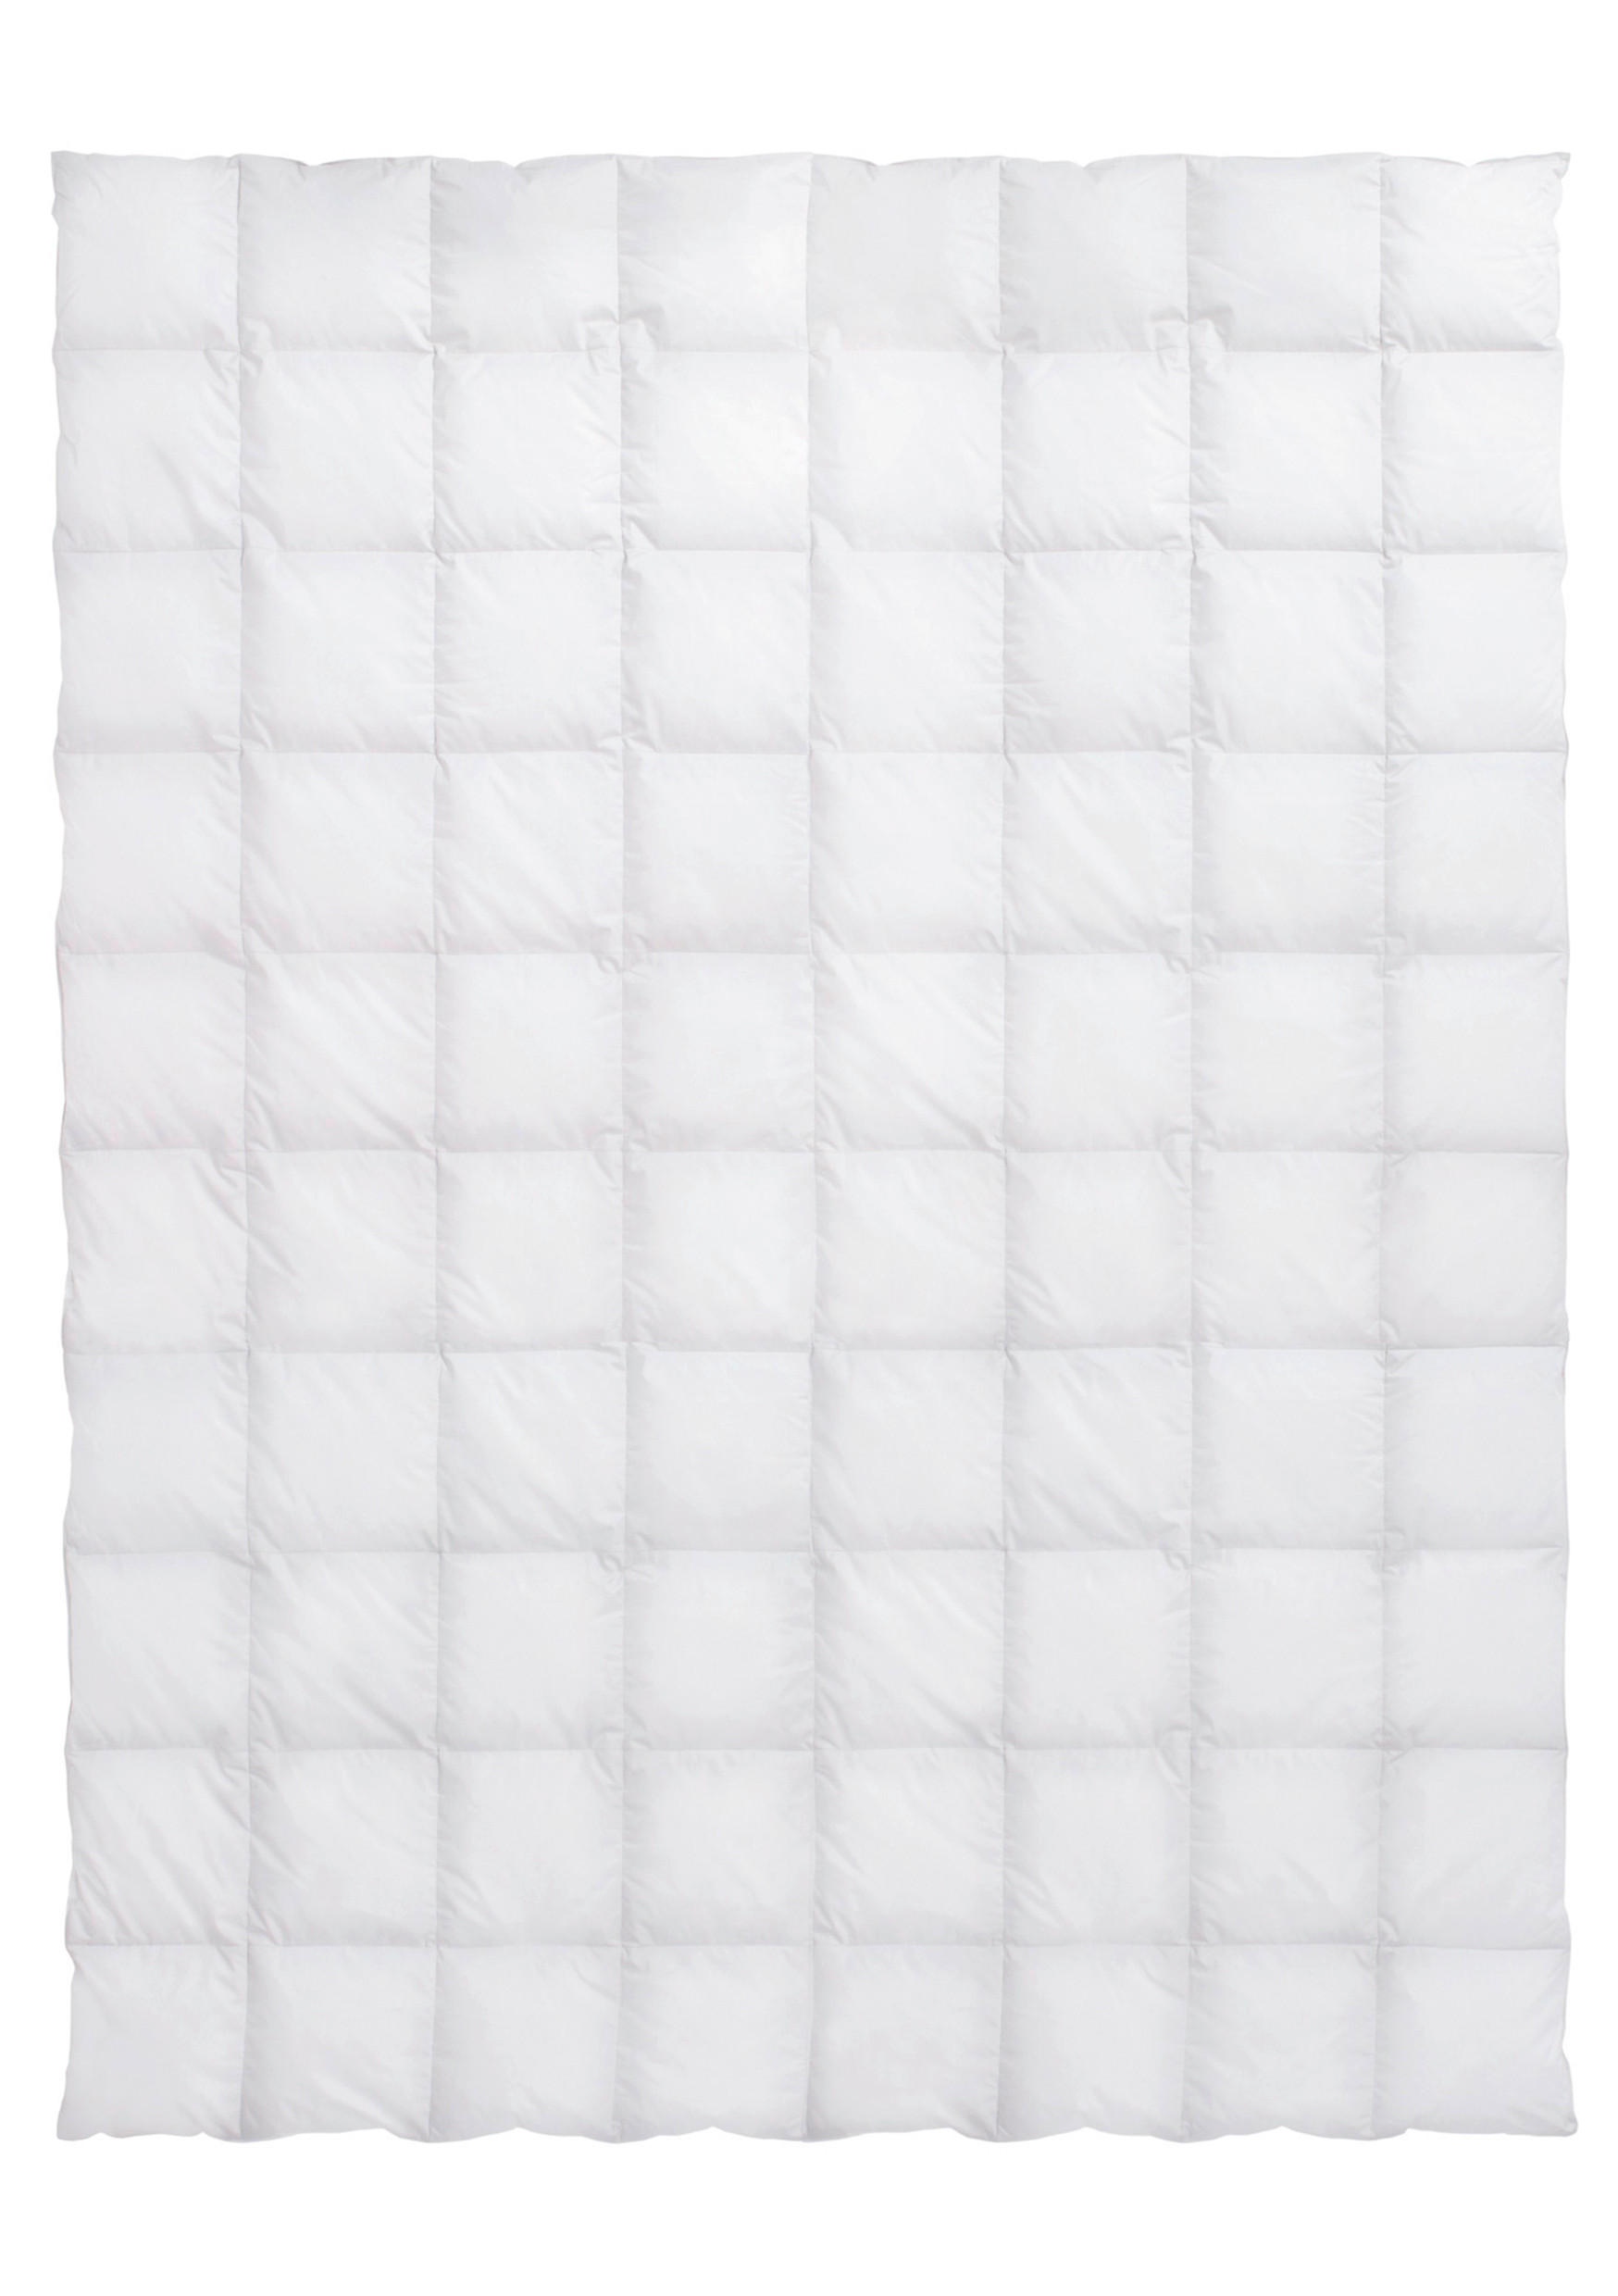 SOMMERBETT  Harmony  200/200 cm   - Weiß, Basics, Textil (200/200cm) - Centa-Star